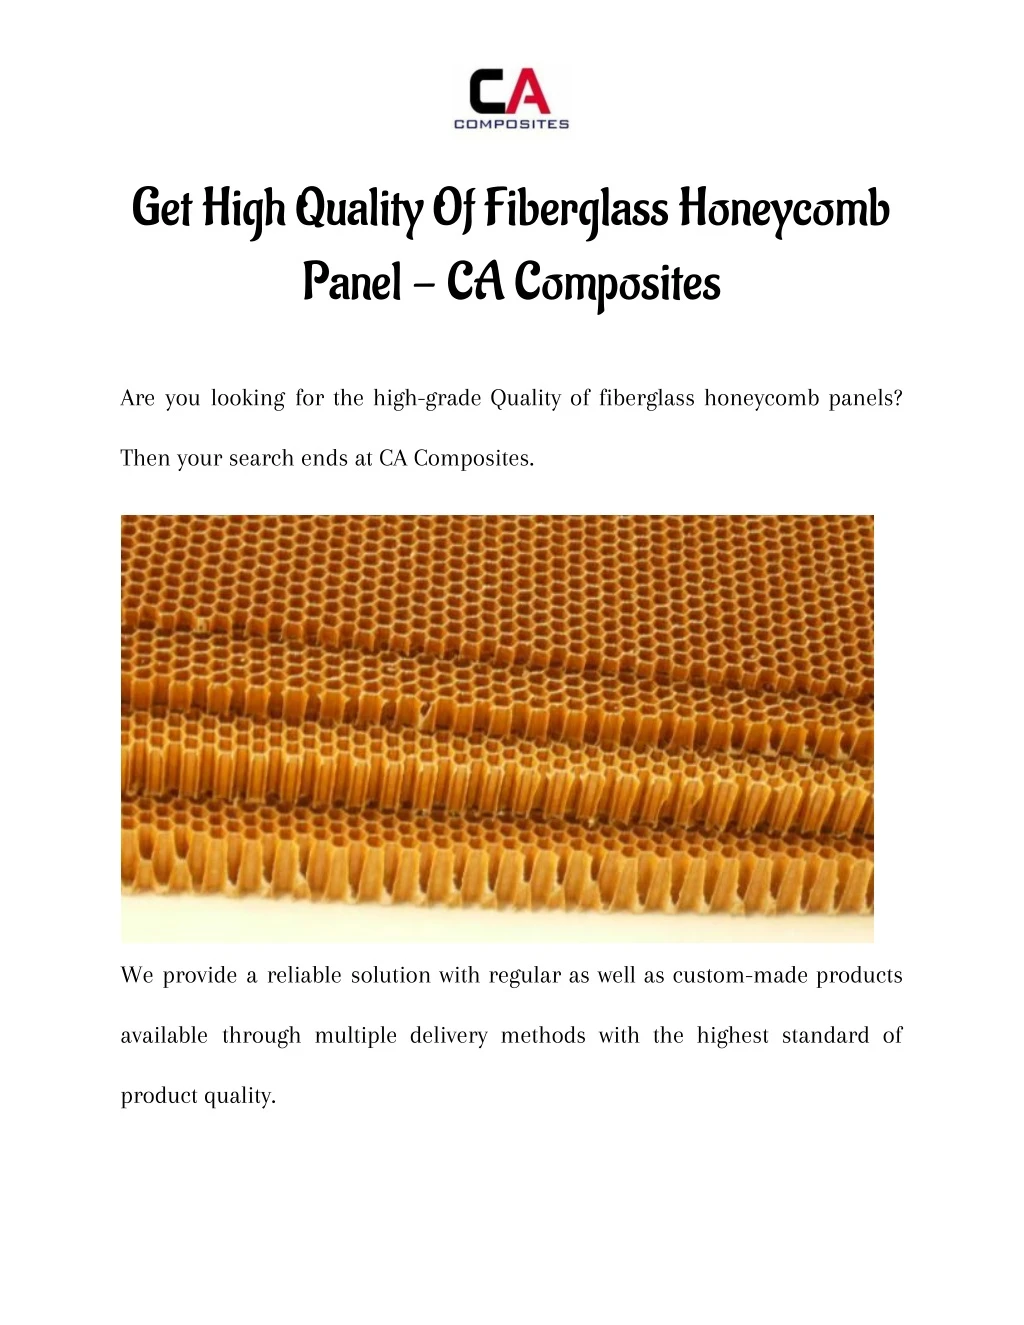 get high quality of fiberglass honeycomb panel